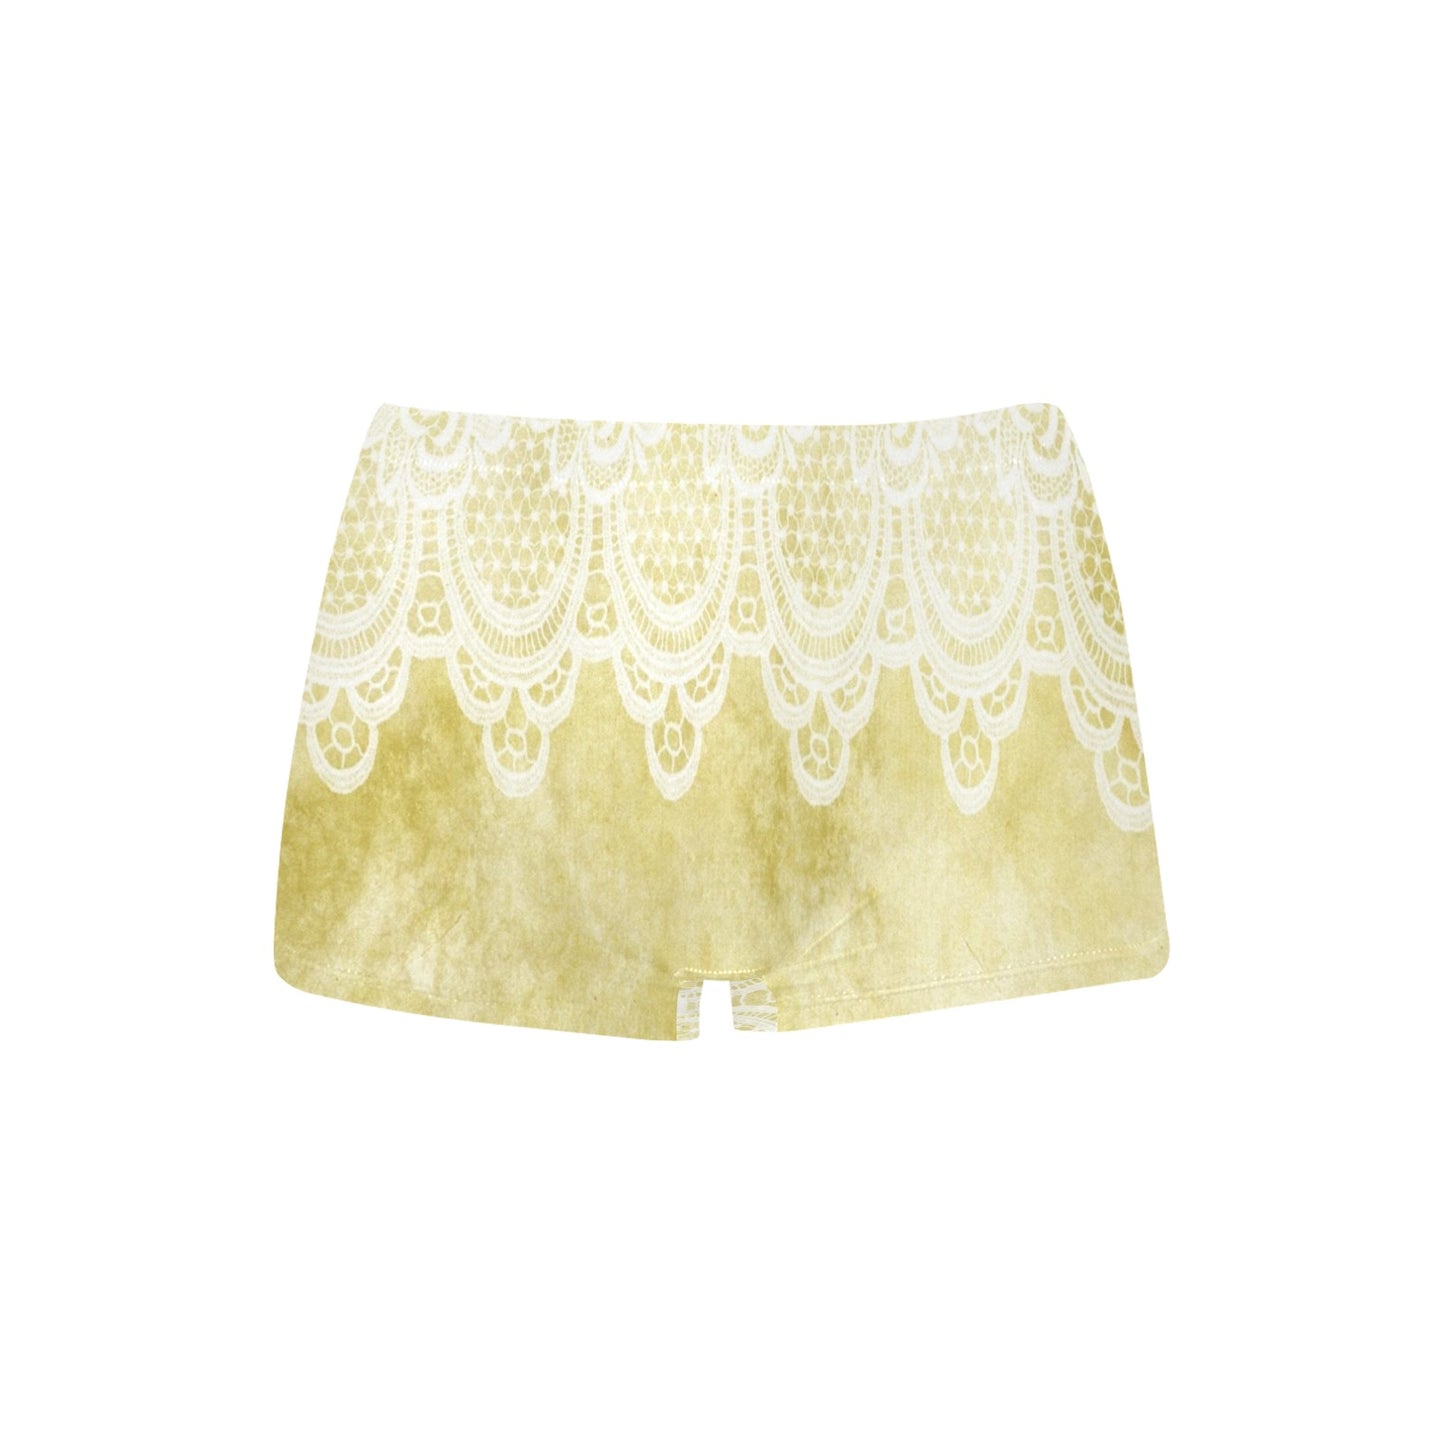 Printed Lace Boyshorts, daisy dukes, pum pum shorts, shortie shorts , design 44